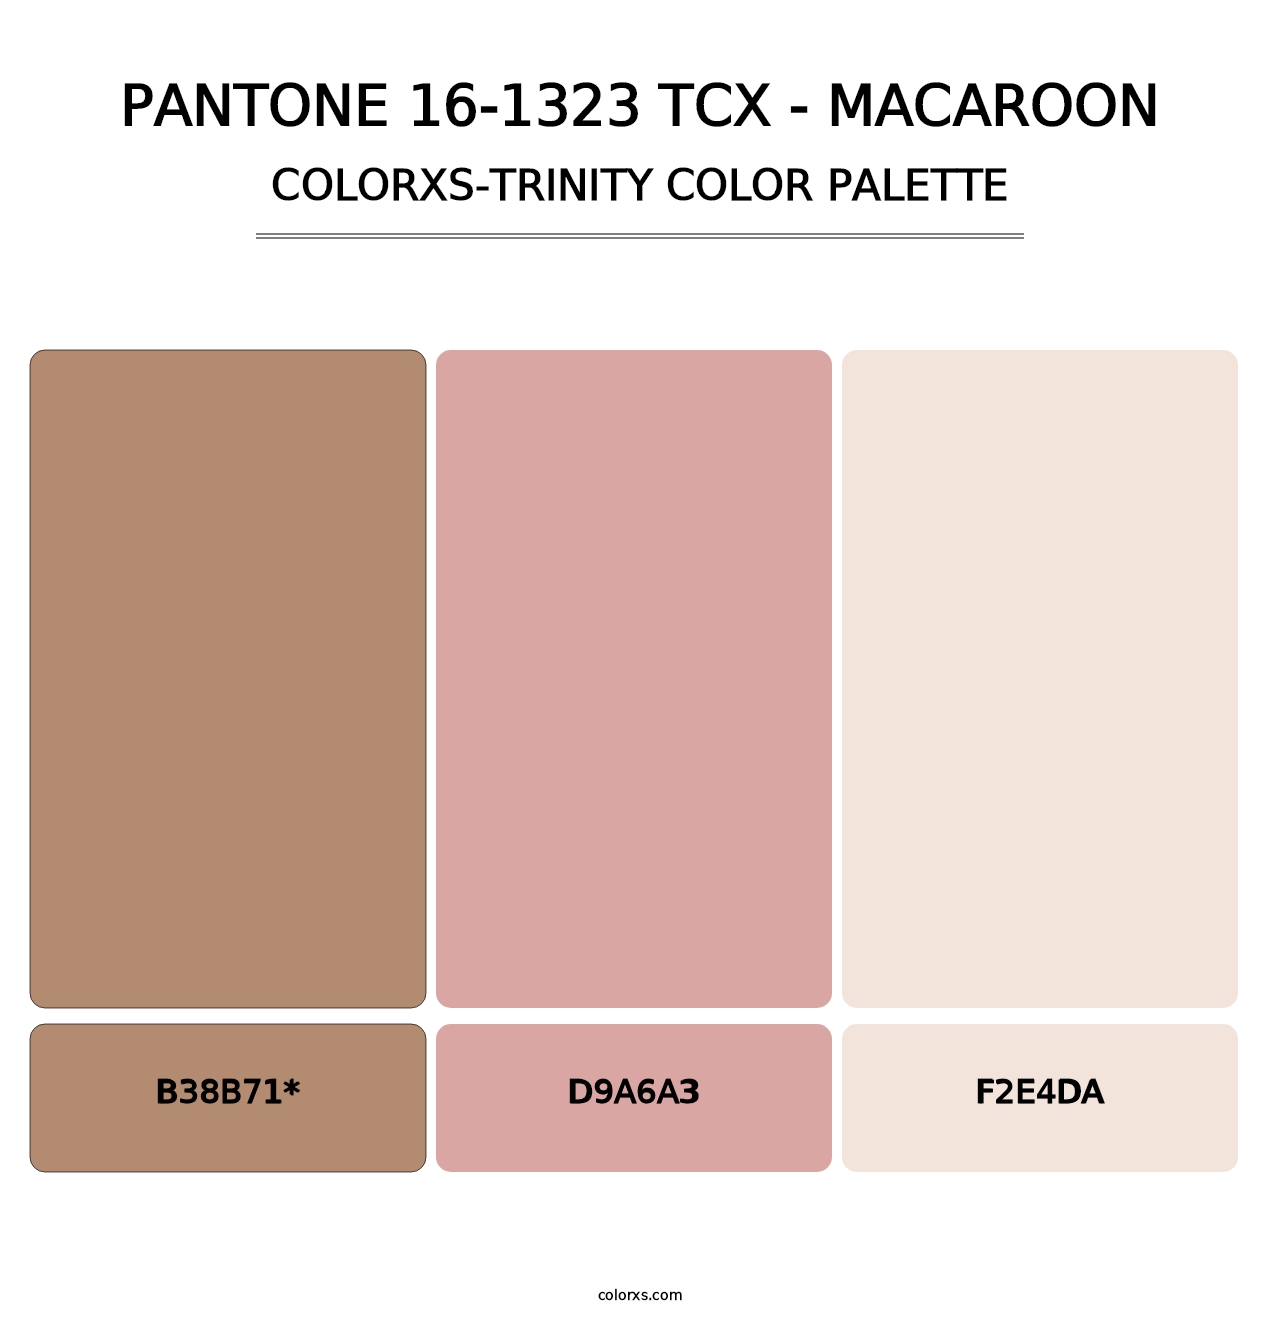 PANTONE 16-1323 TCX - Macaroon - Colorxs Trinity Palette